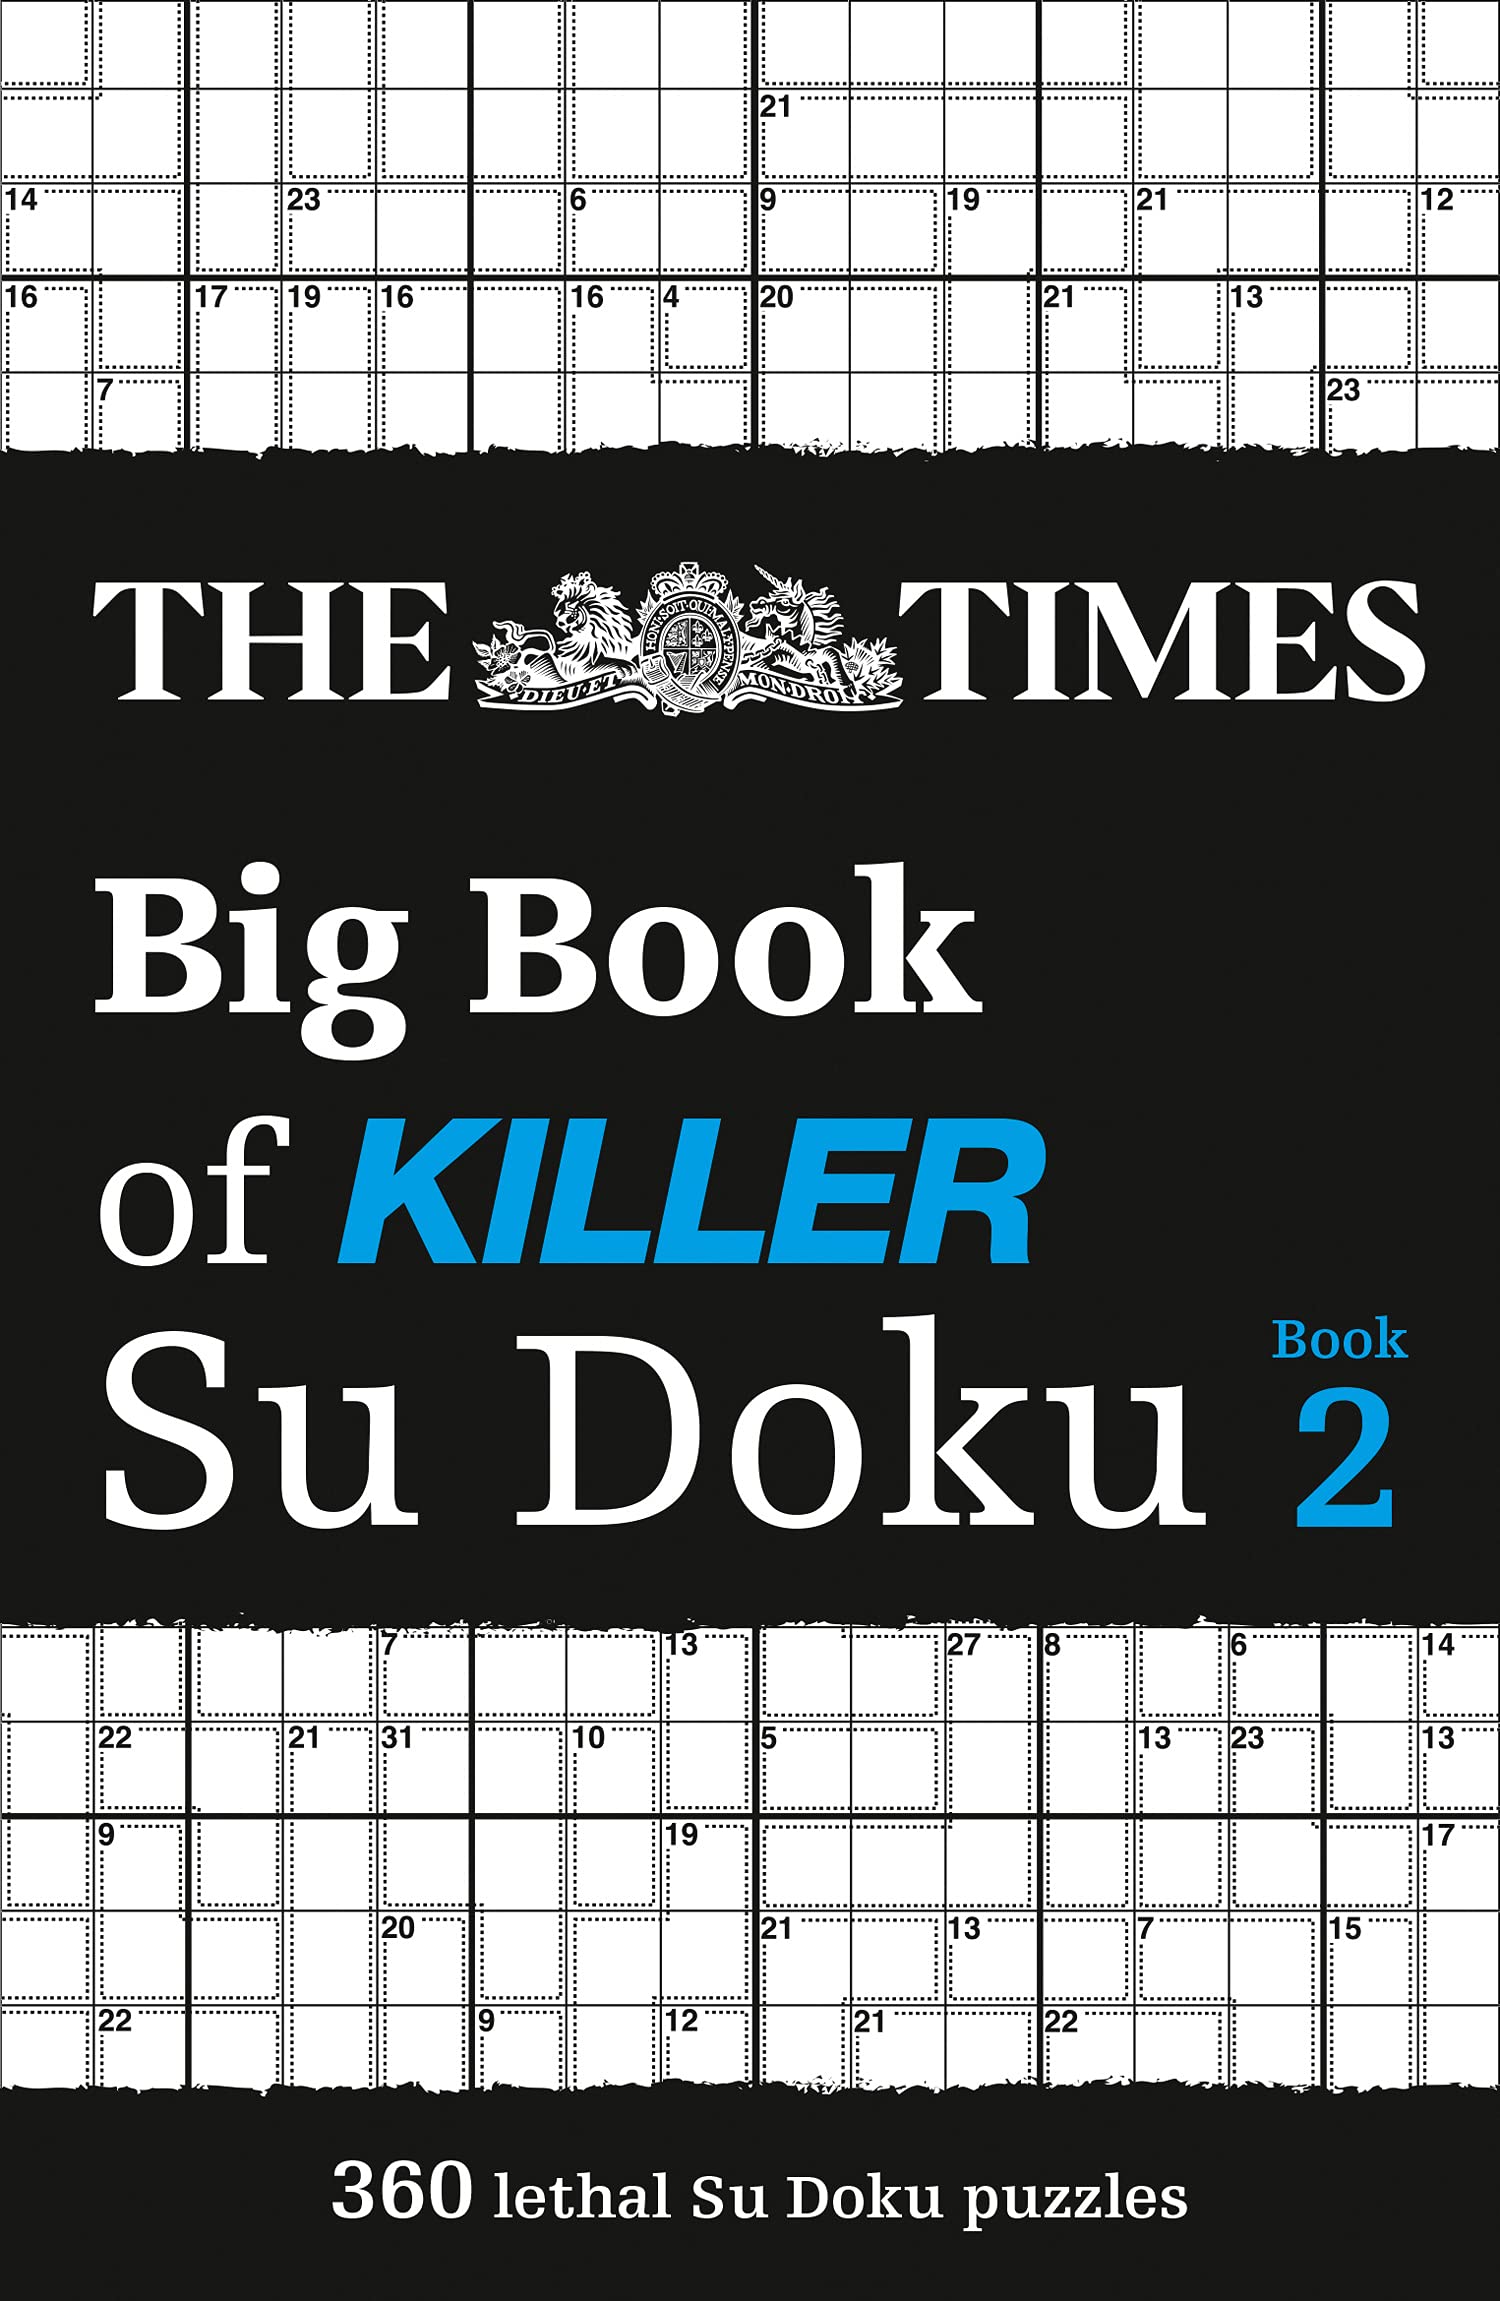 The Times Big Book of Killer Su Doku - Book 2